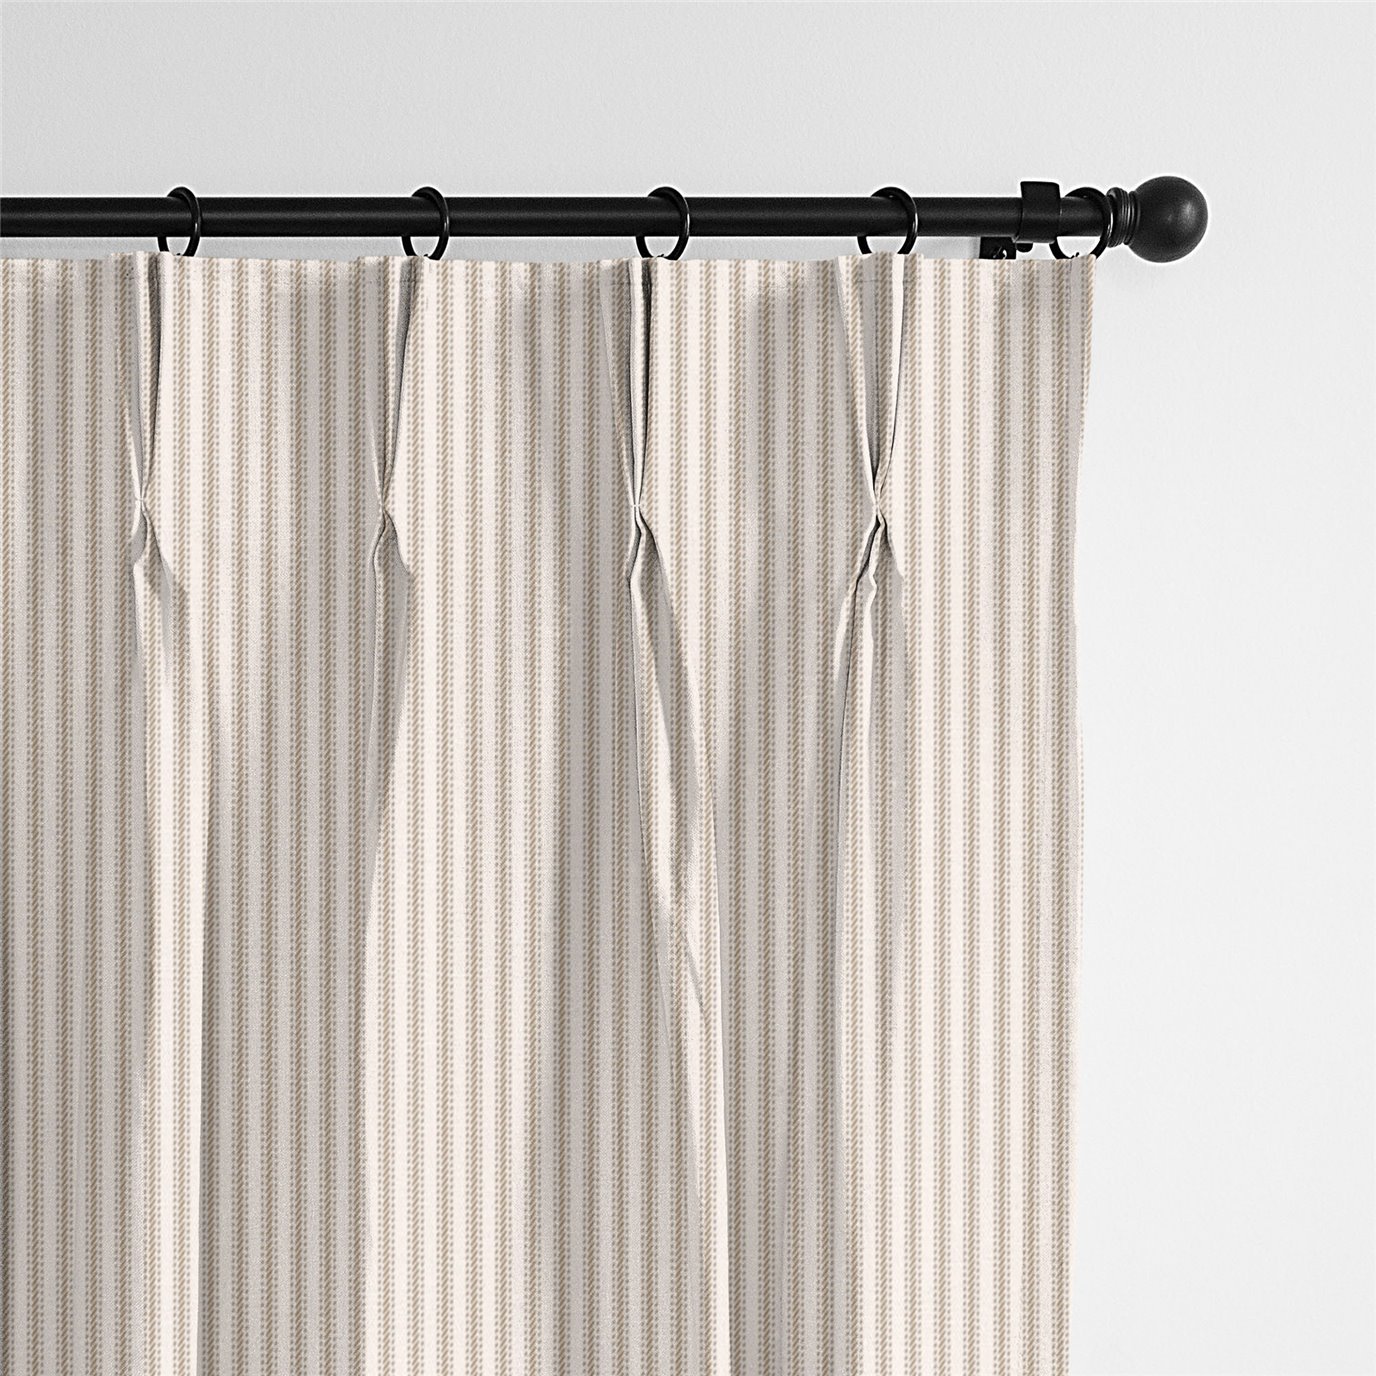 Cruz Ticking Stripes Taupe/Ivory Pinch Pleat Drapery Panel - Pair - Size 20"x144"